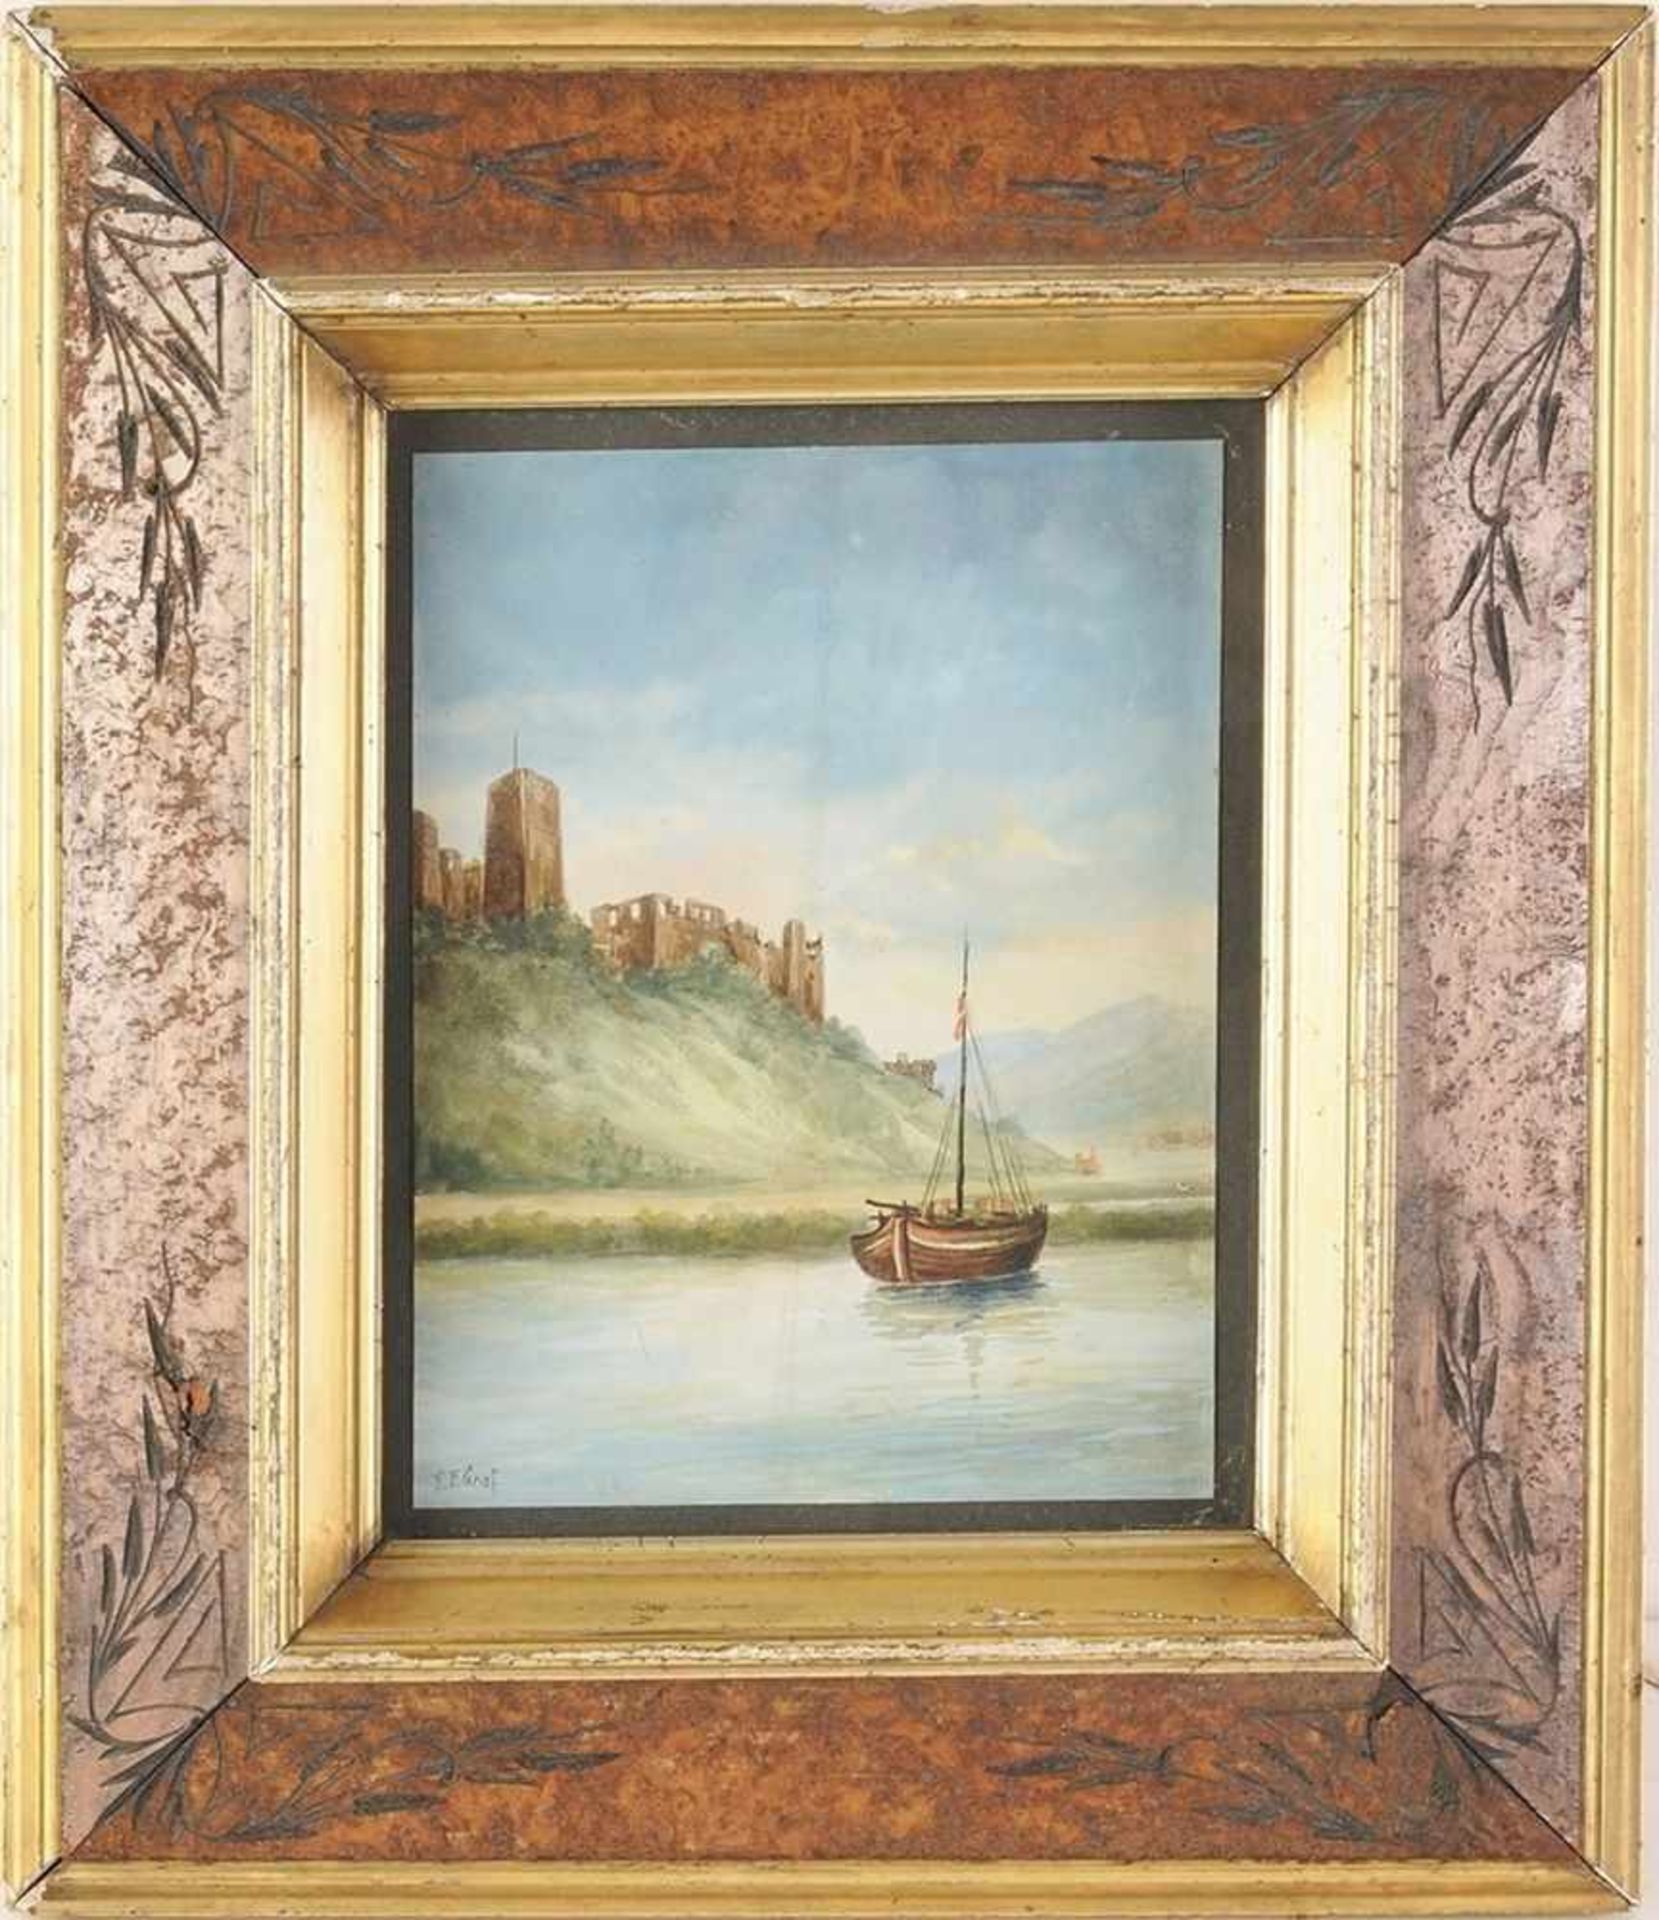 Graf, R.E.(Deutscher Maler, 1. H. 20. Jh.) Aquarell/Papier. Kleine Flusslandschaft mit Boot u.